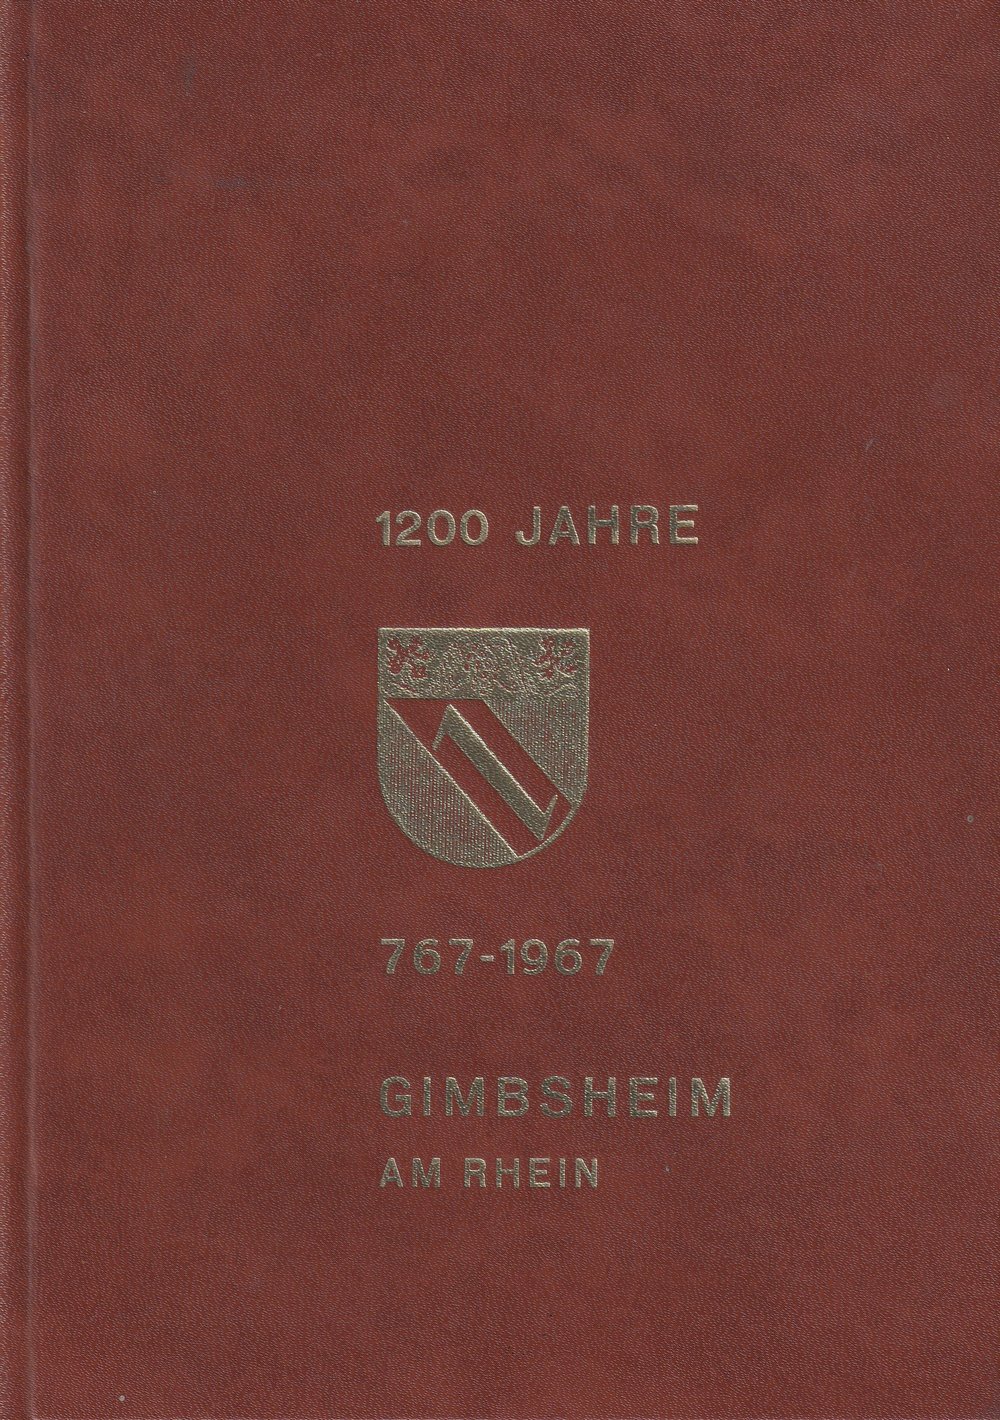 1200 Jahre Gimbsheim (Kulturverein Guntersblum CC BY-NC-SA)